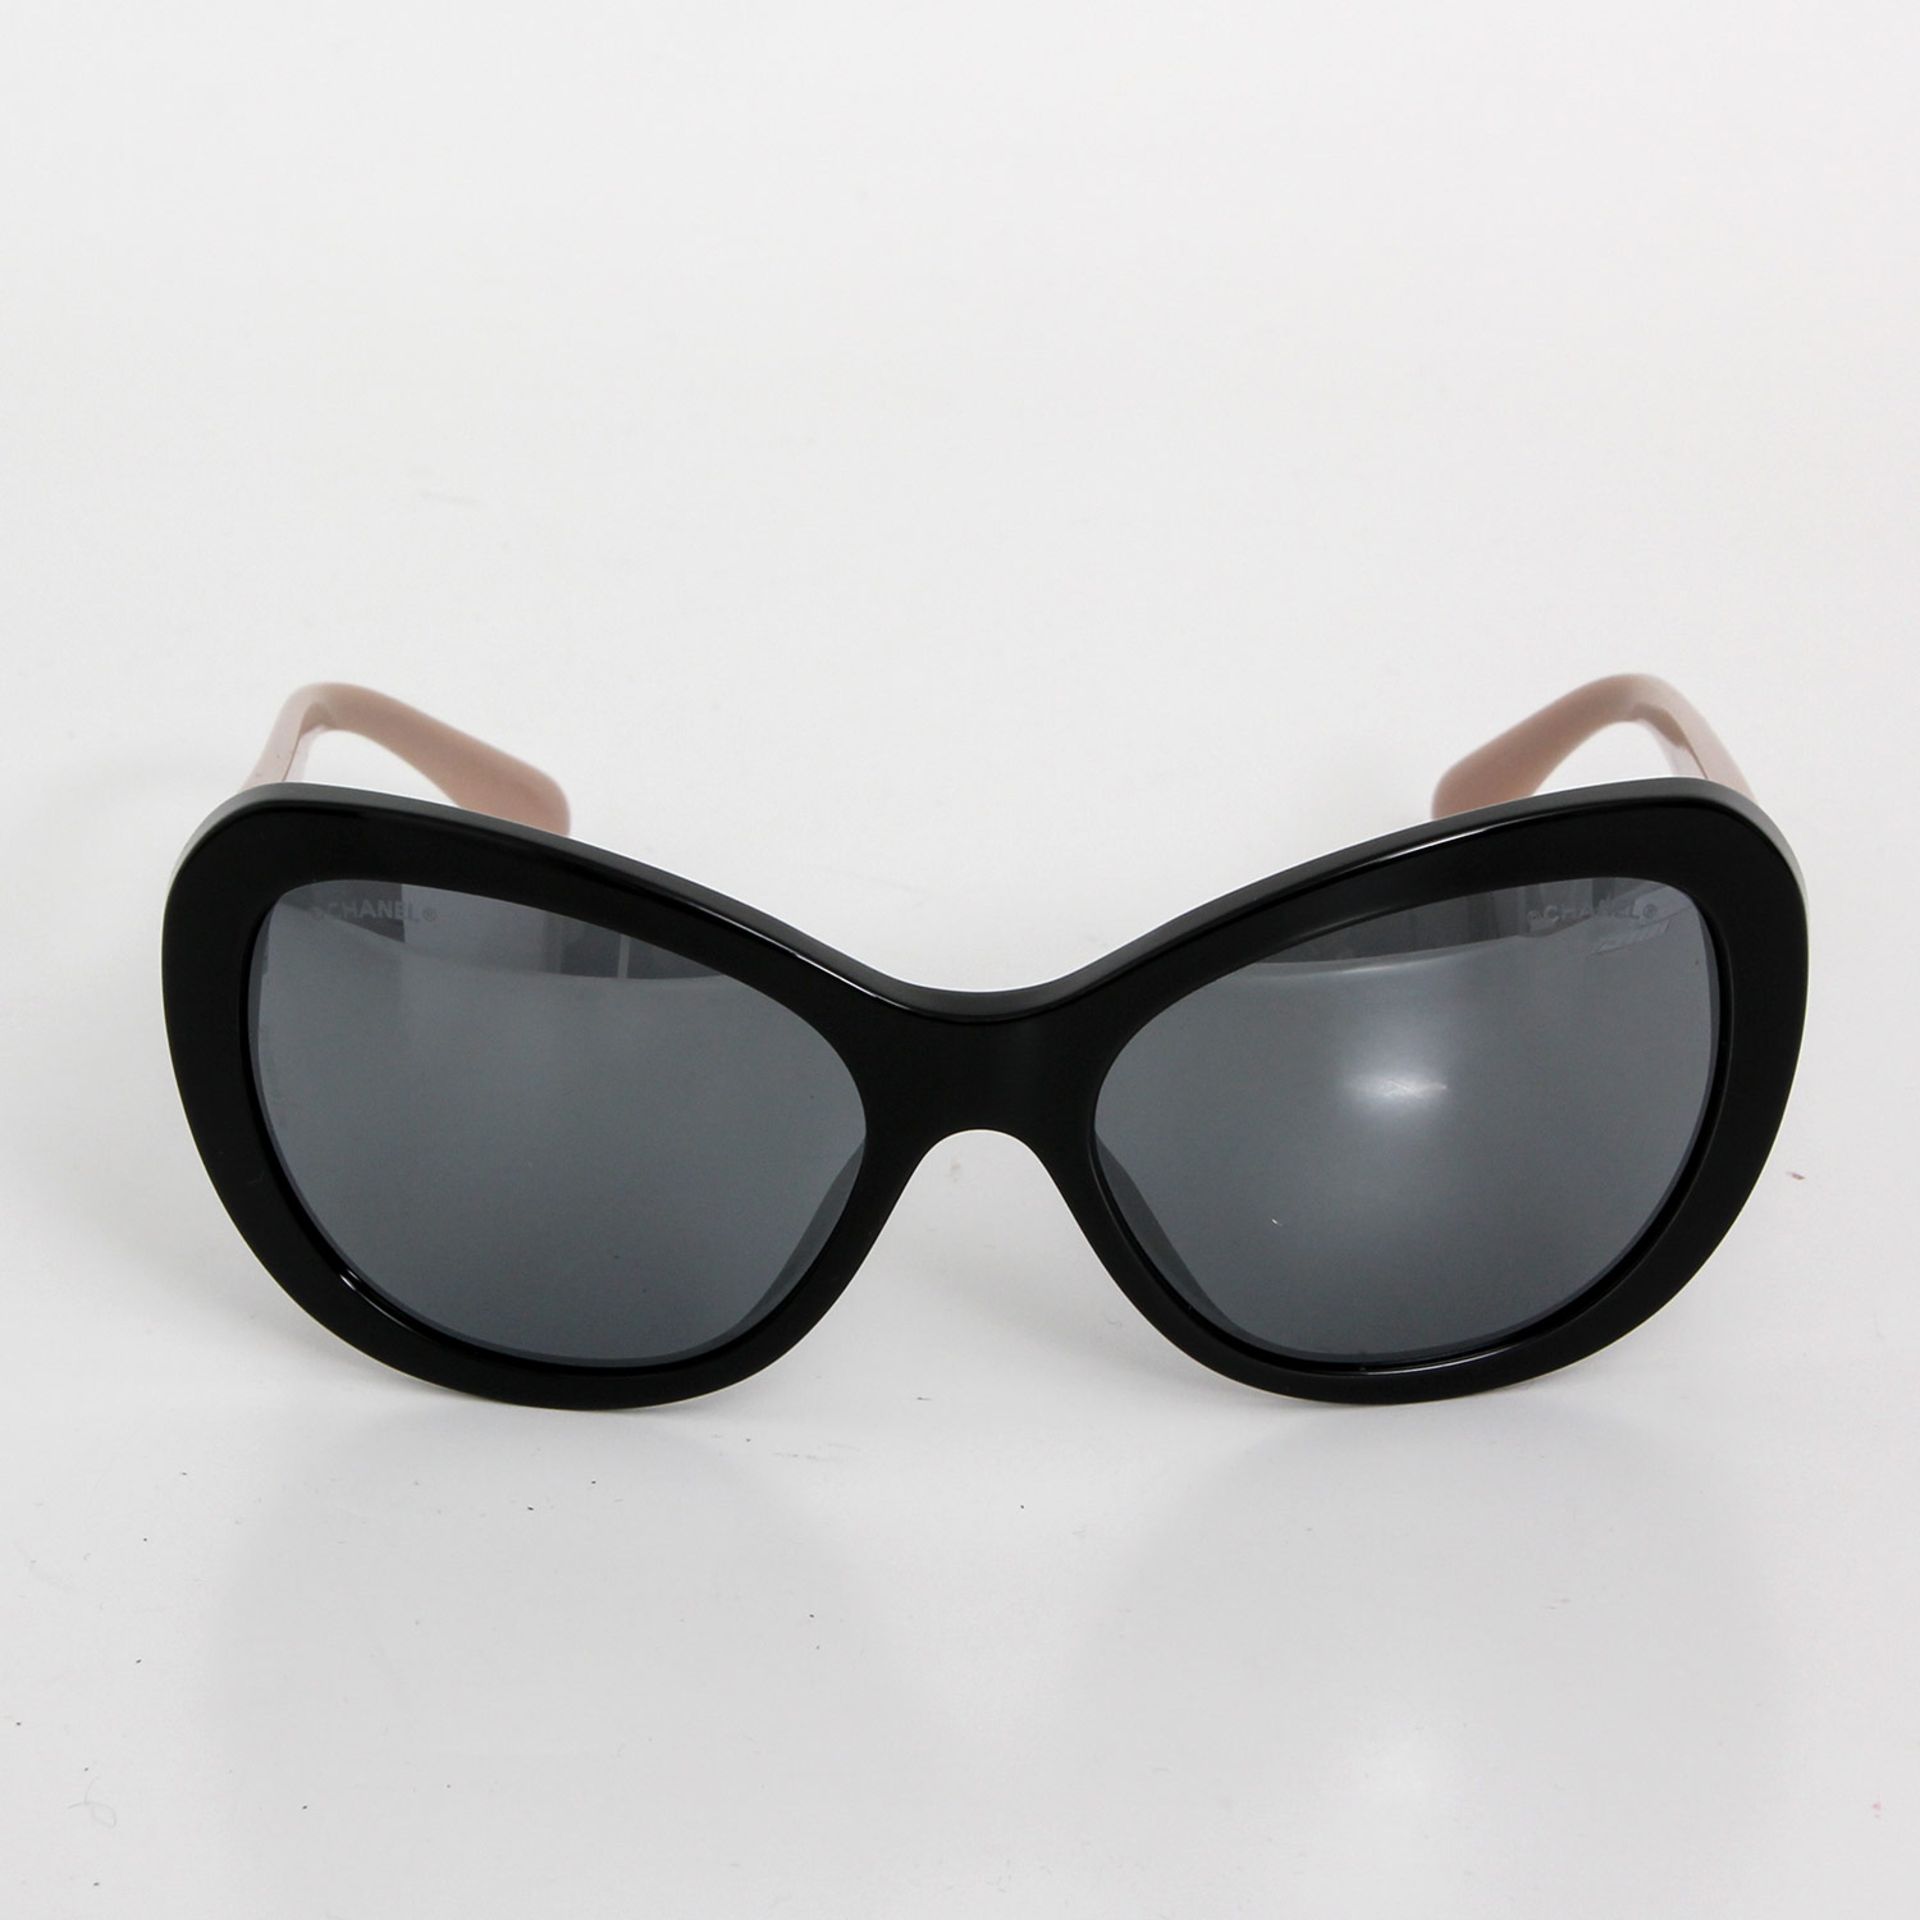 CHANEL edle Sonnenbrille. NP. ca.: 350,-. Elegante Cat Eye Form mit breitem Rahmen in Schwarz,